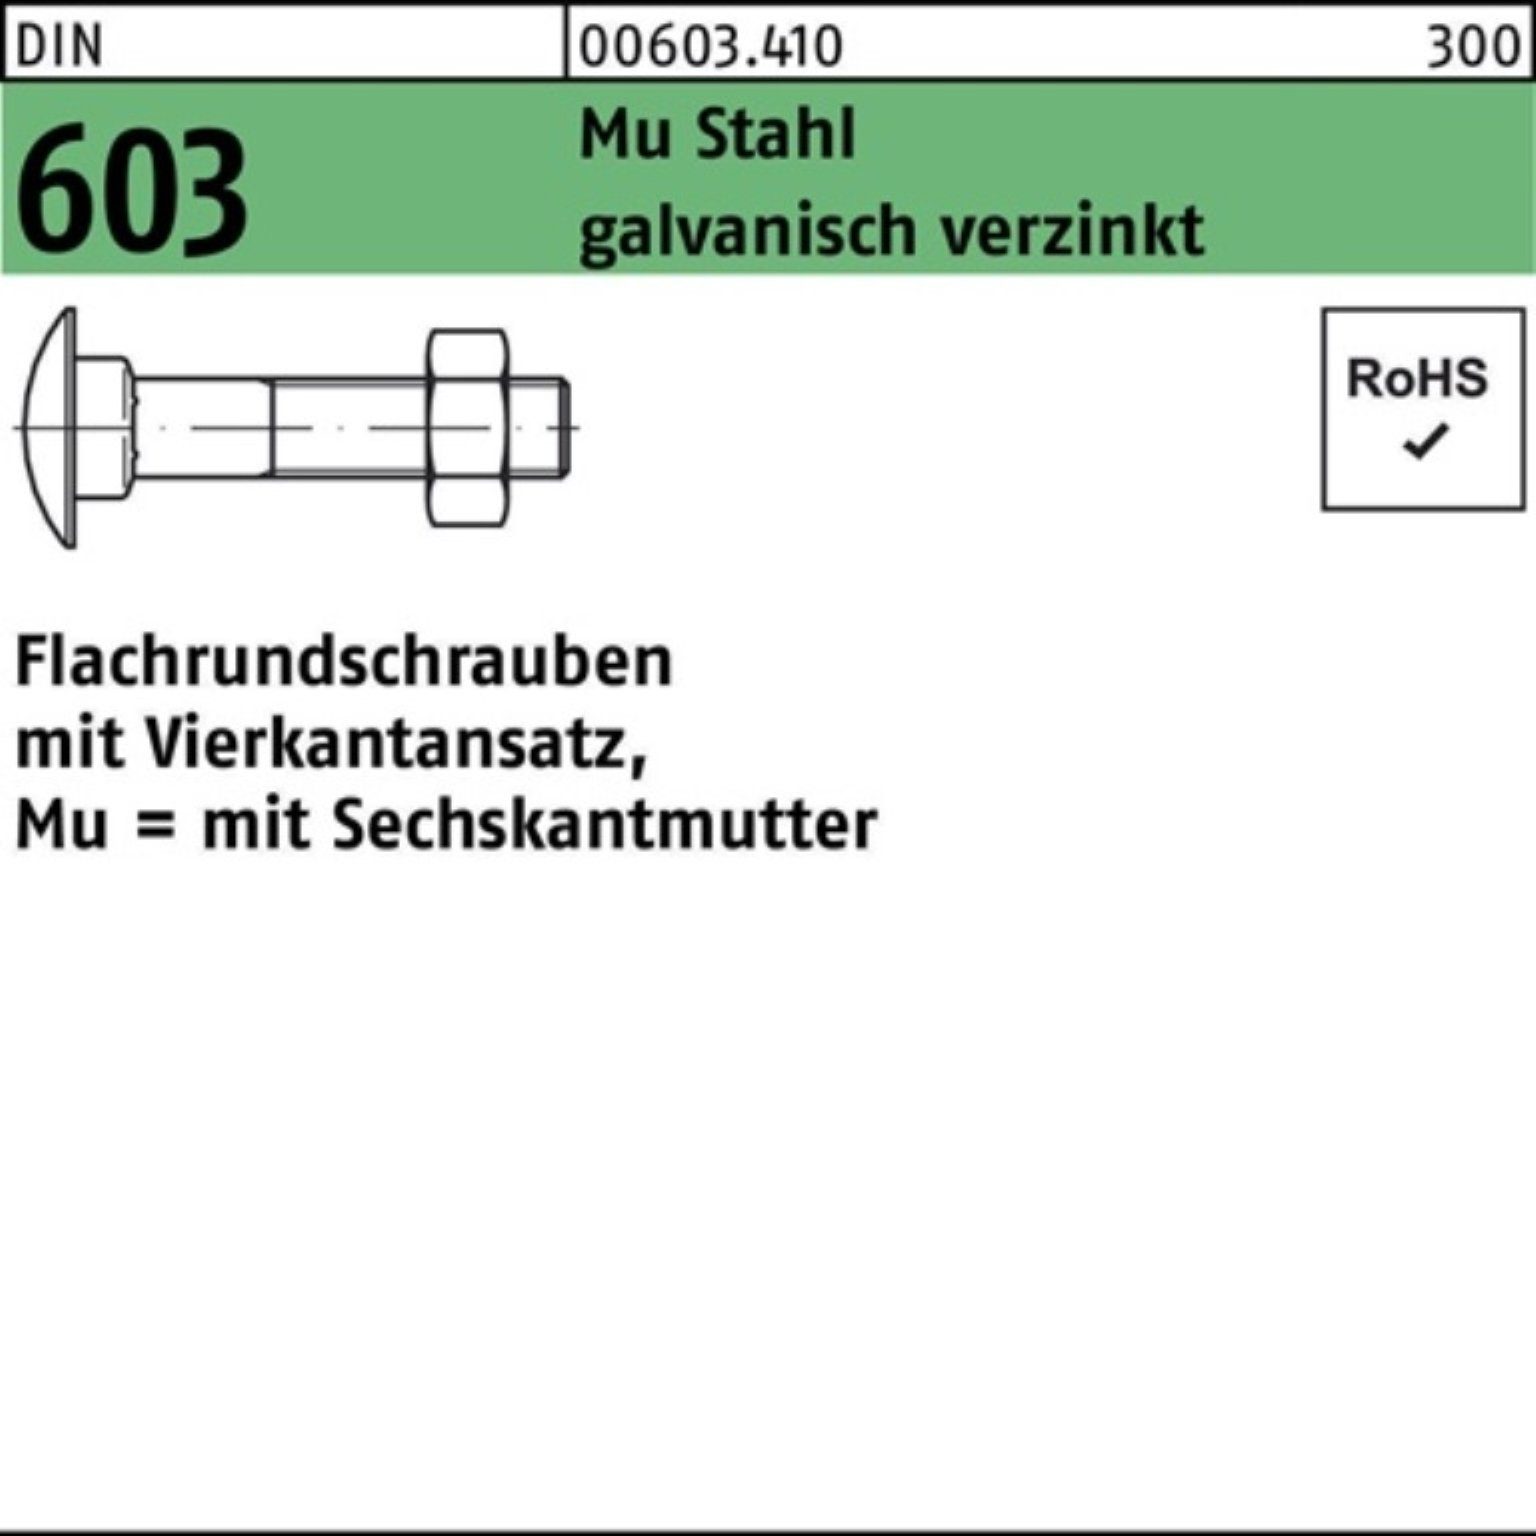 Pack 603 Vierkantansatz/6-ktmutter Reyher Schraube DIN Flachrundschraube M8x110 100er